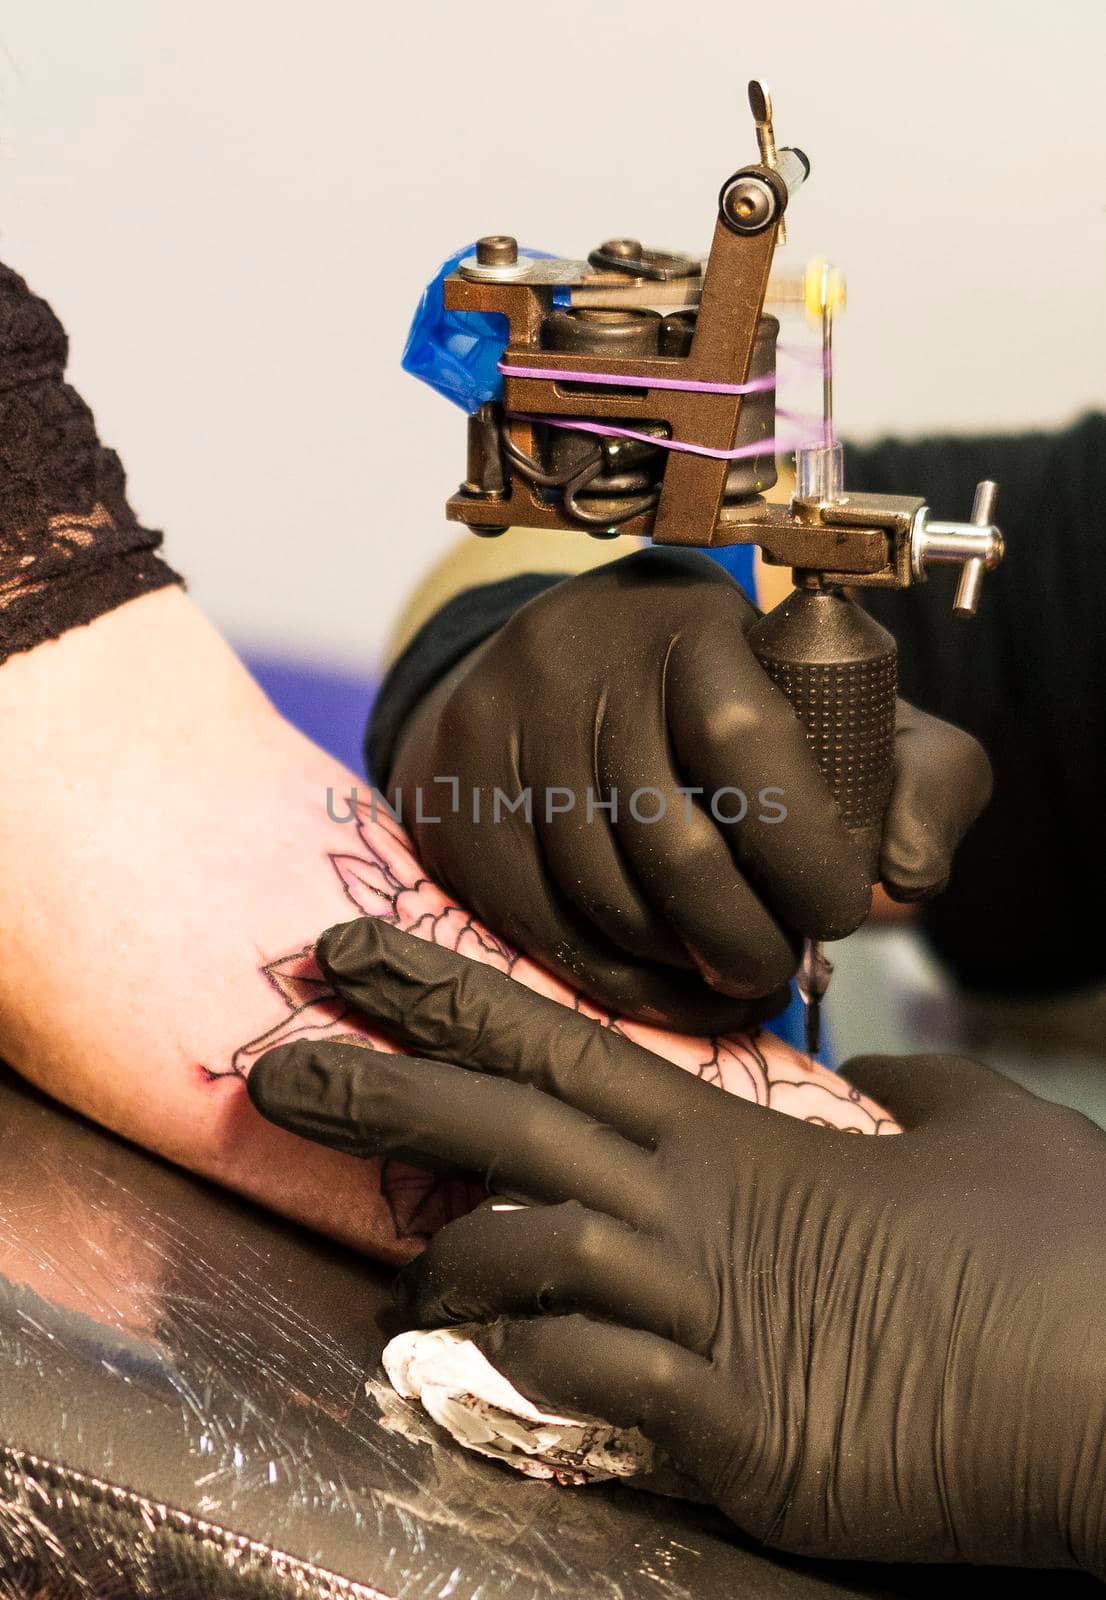 a tattoo artist draws a flower on a person's skin.